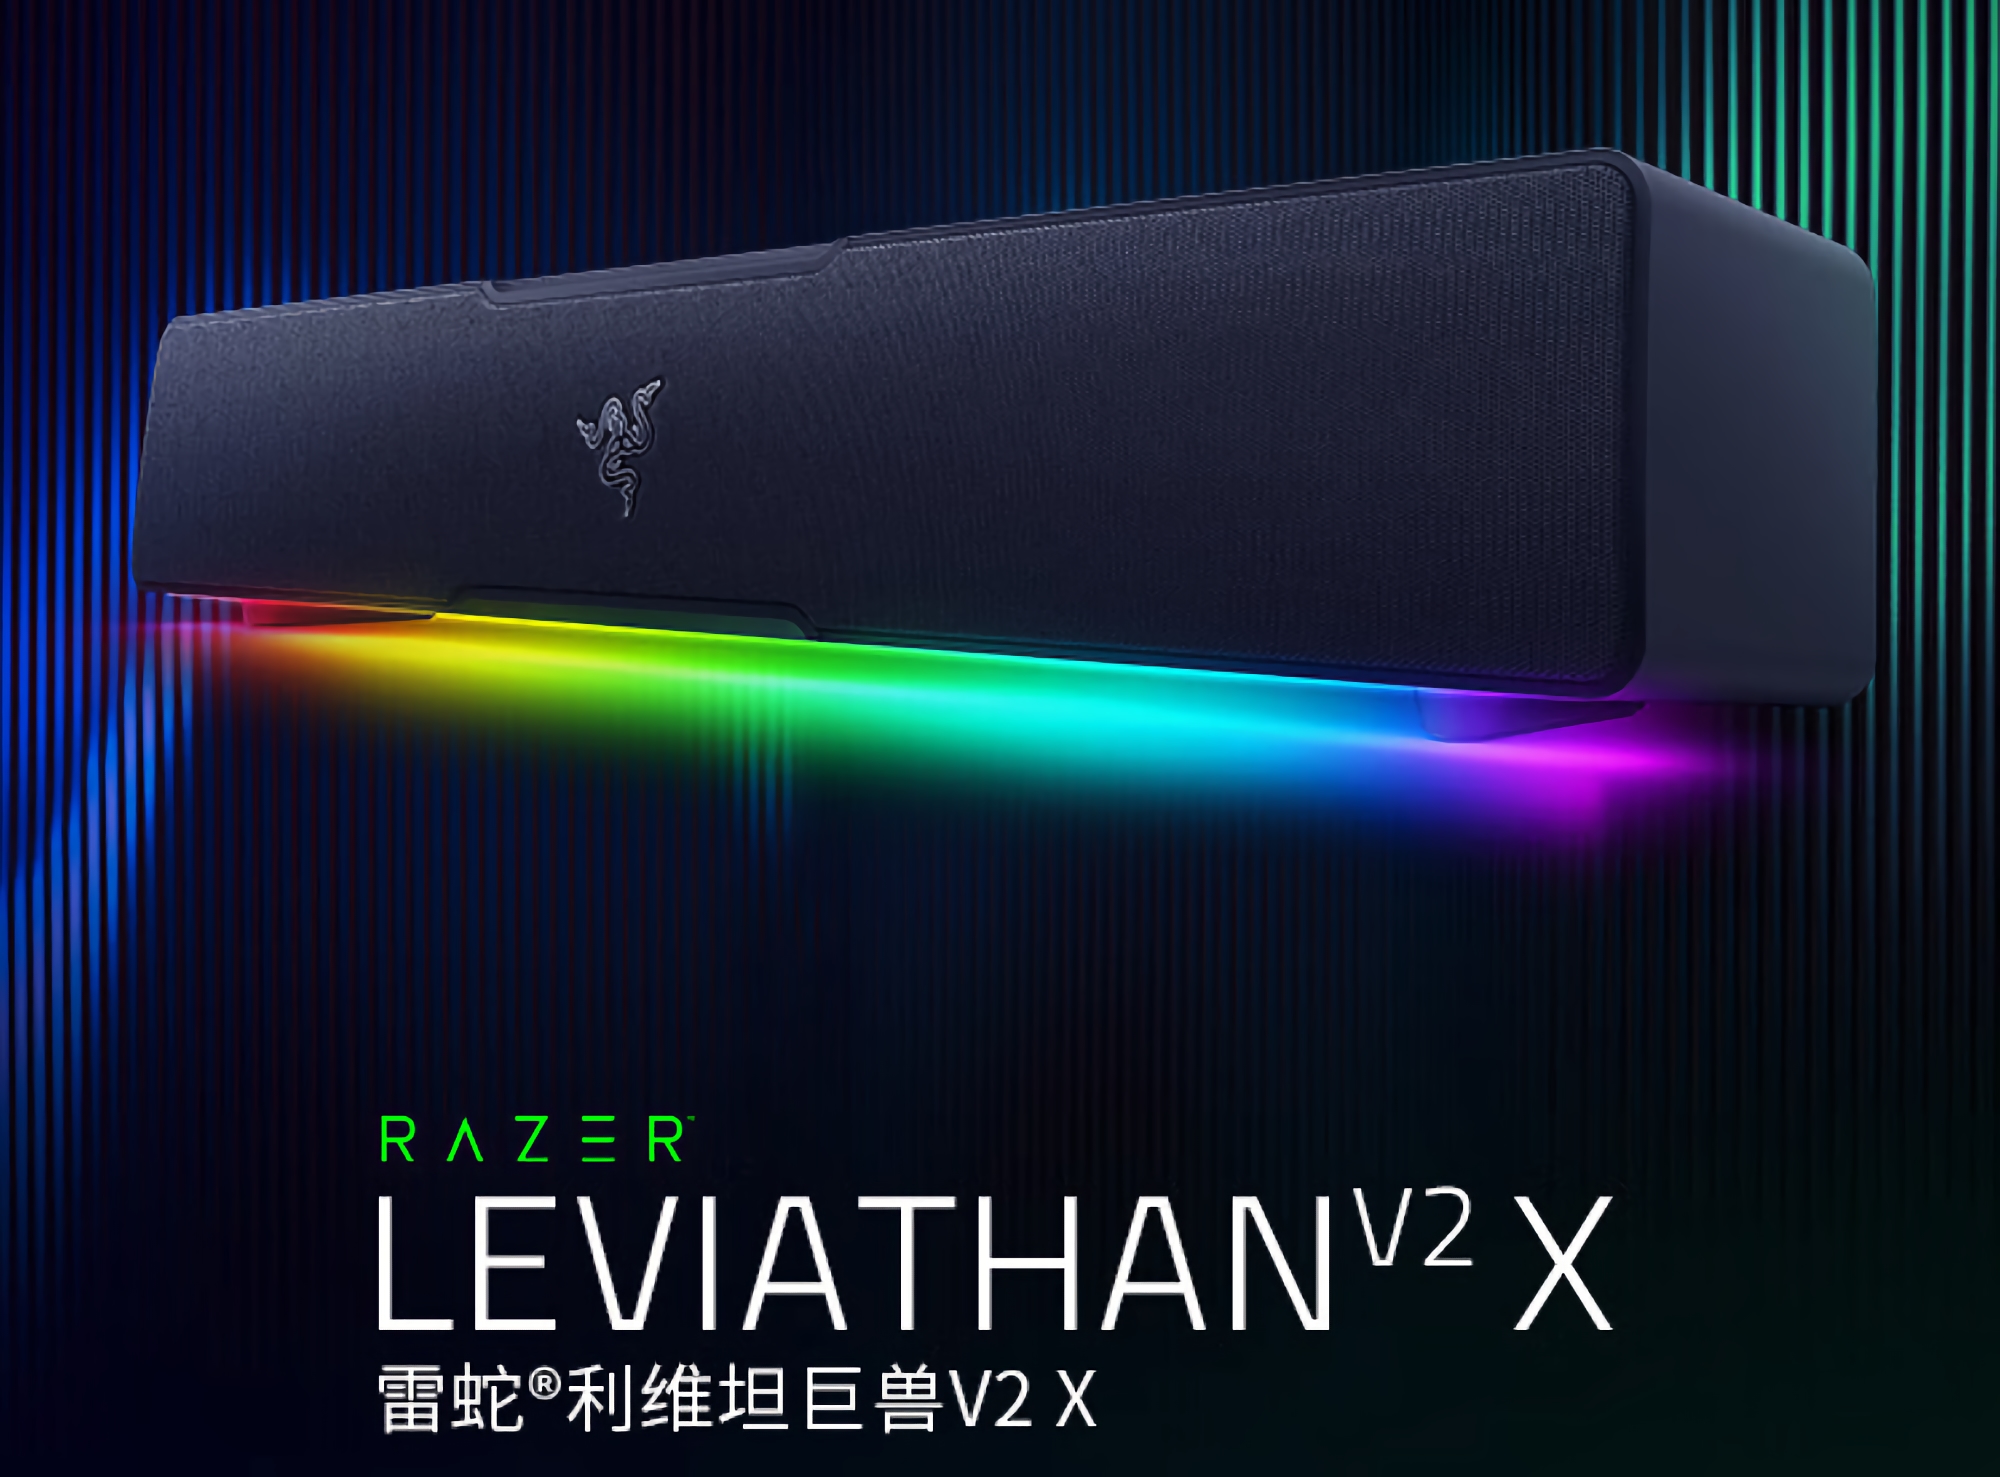 Razer Leviathan V2 X: compact 65-watt soundbar with Bluetooth, USB-C port and RGB illumination for $133